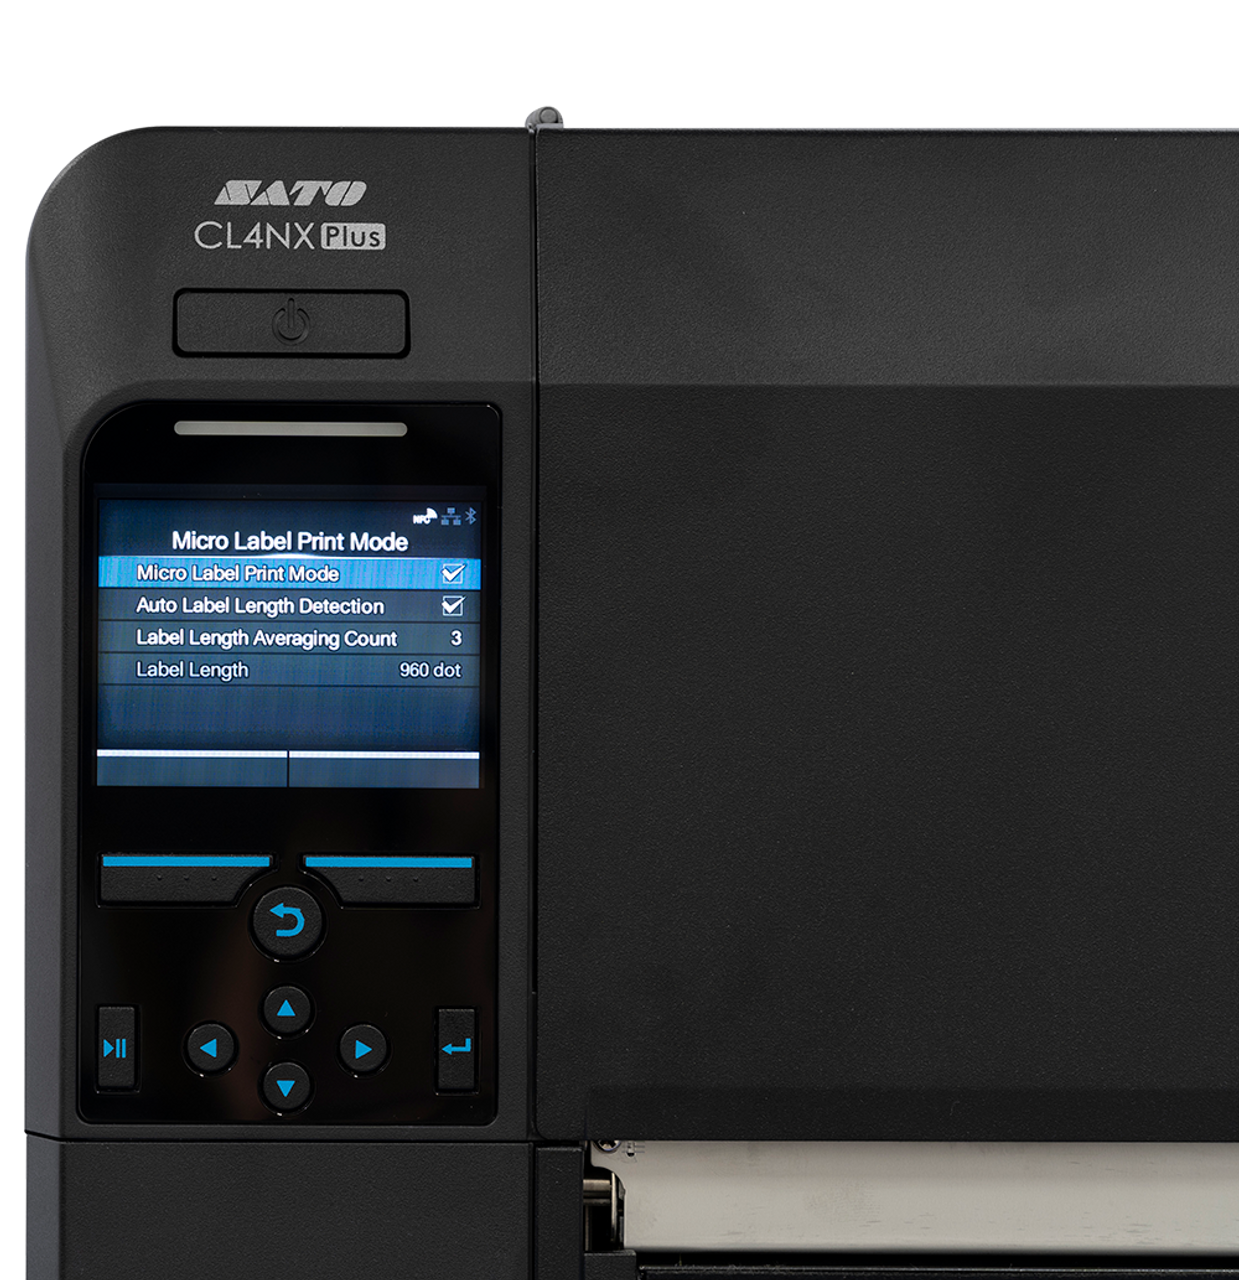 slag Diplomatiske spørgsmål Jonglere SATO CL4NX Plus Series Thermal HF/NFC RFID Printer